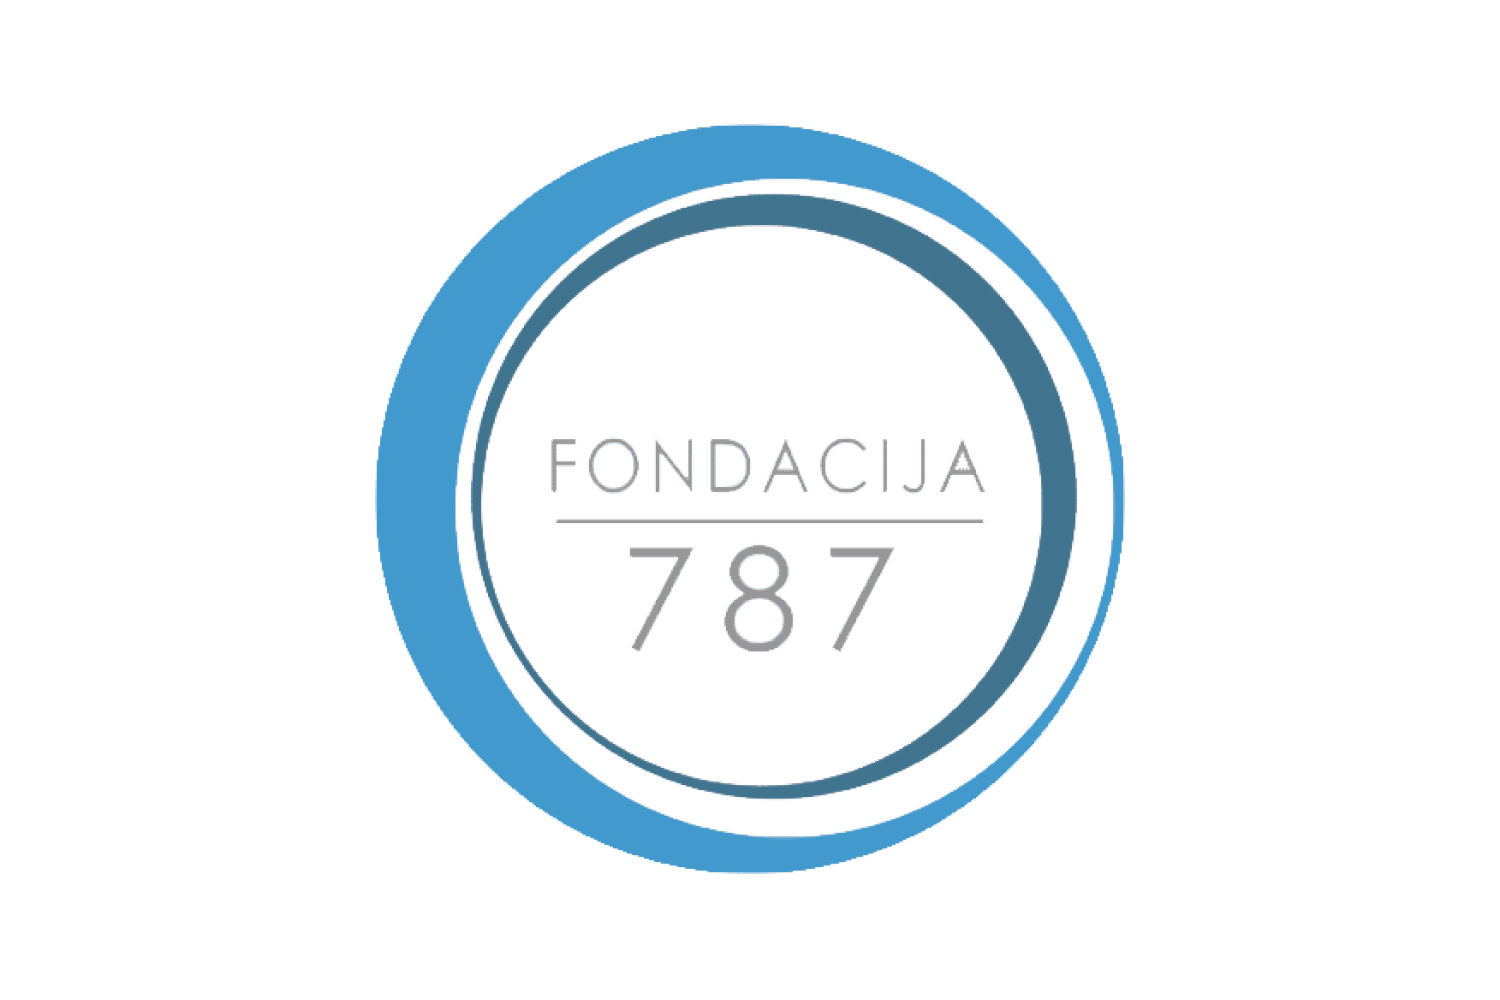 Fondacija 787 logo